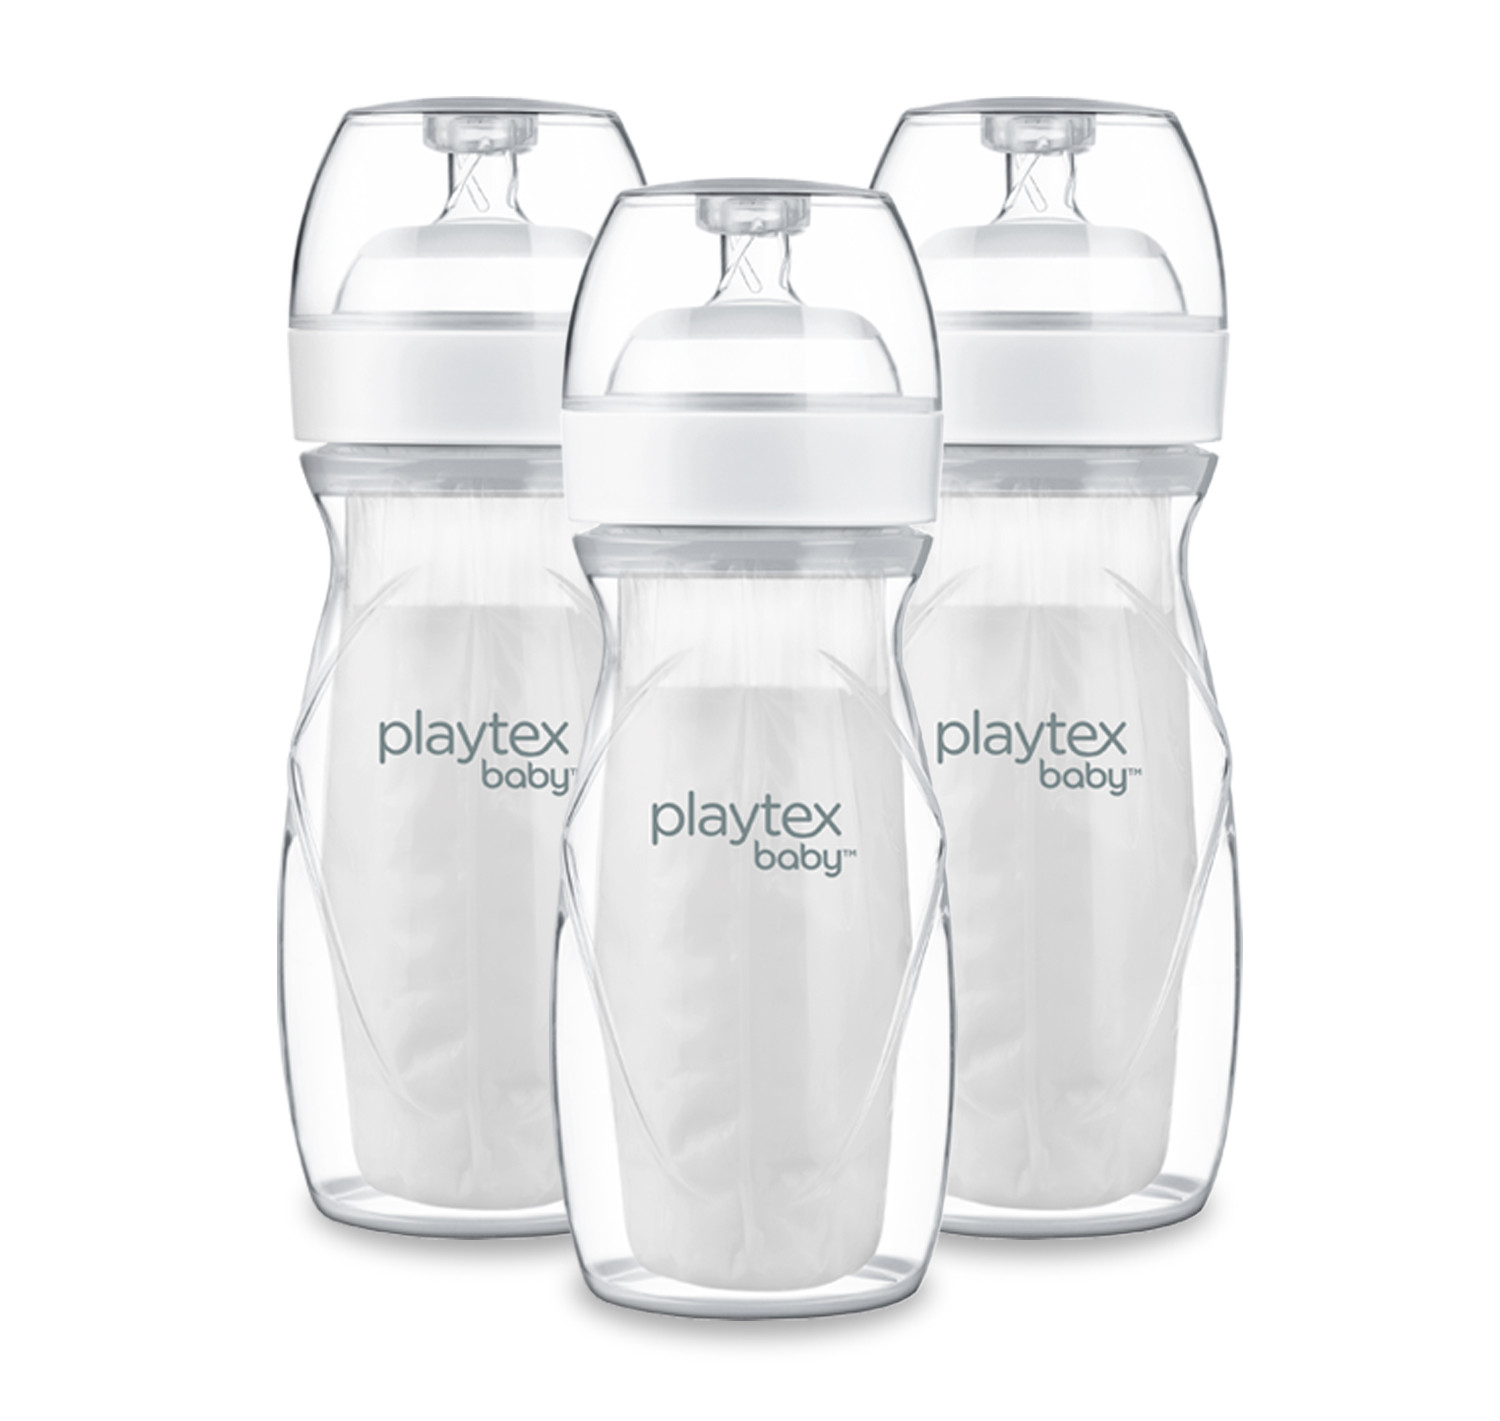 Playtex Baby Nurser with Drop-Ins Liners Baby Bottles, 8 oz, 3 Pack - image 1 of 18